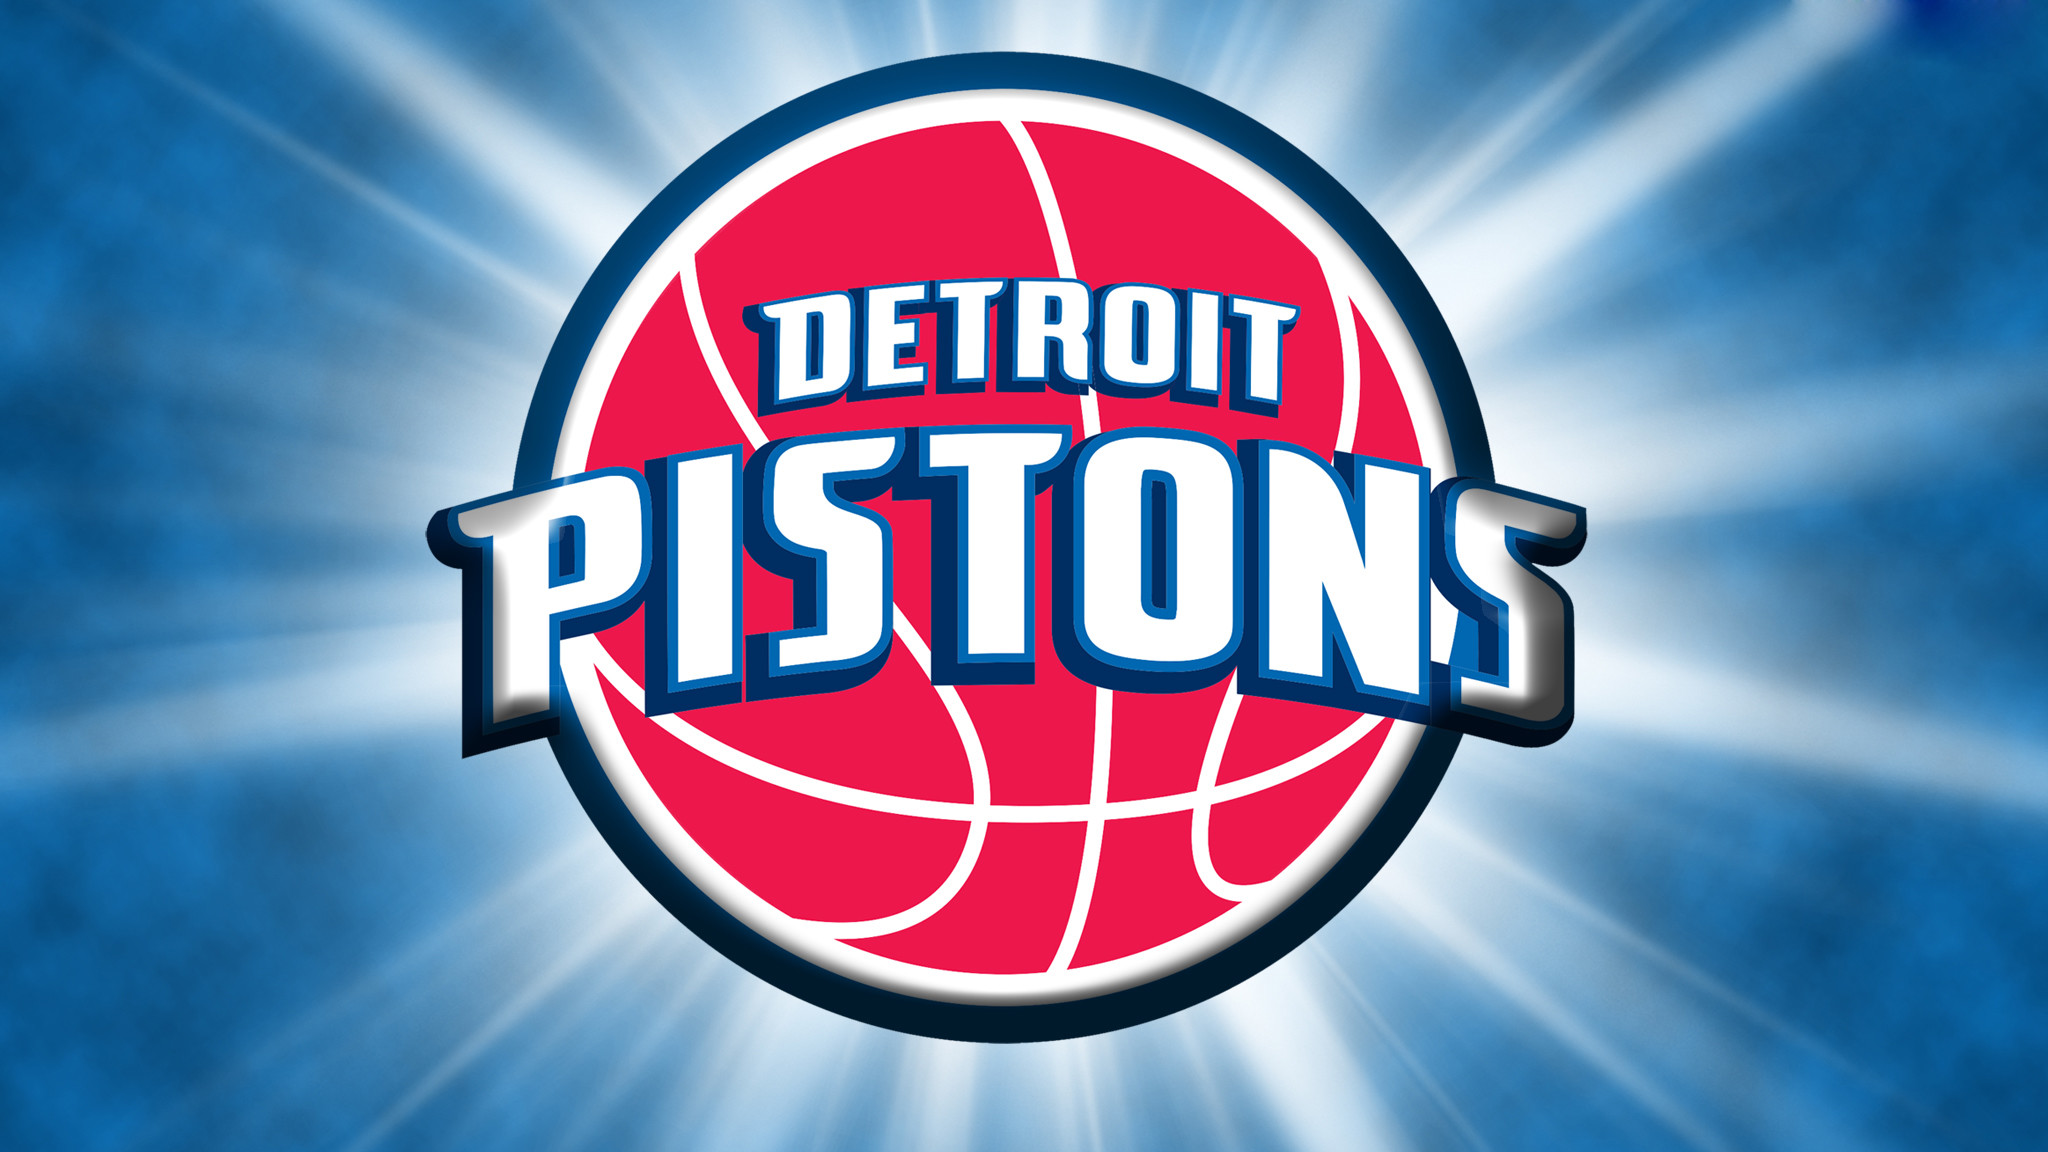 Detroit pistons. Детройт Пистонс 2004. Детройт Пистонс команда. Логотип Detroit Pistons. Детройт Пистонс 90.